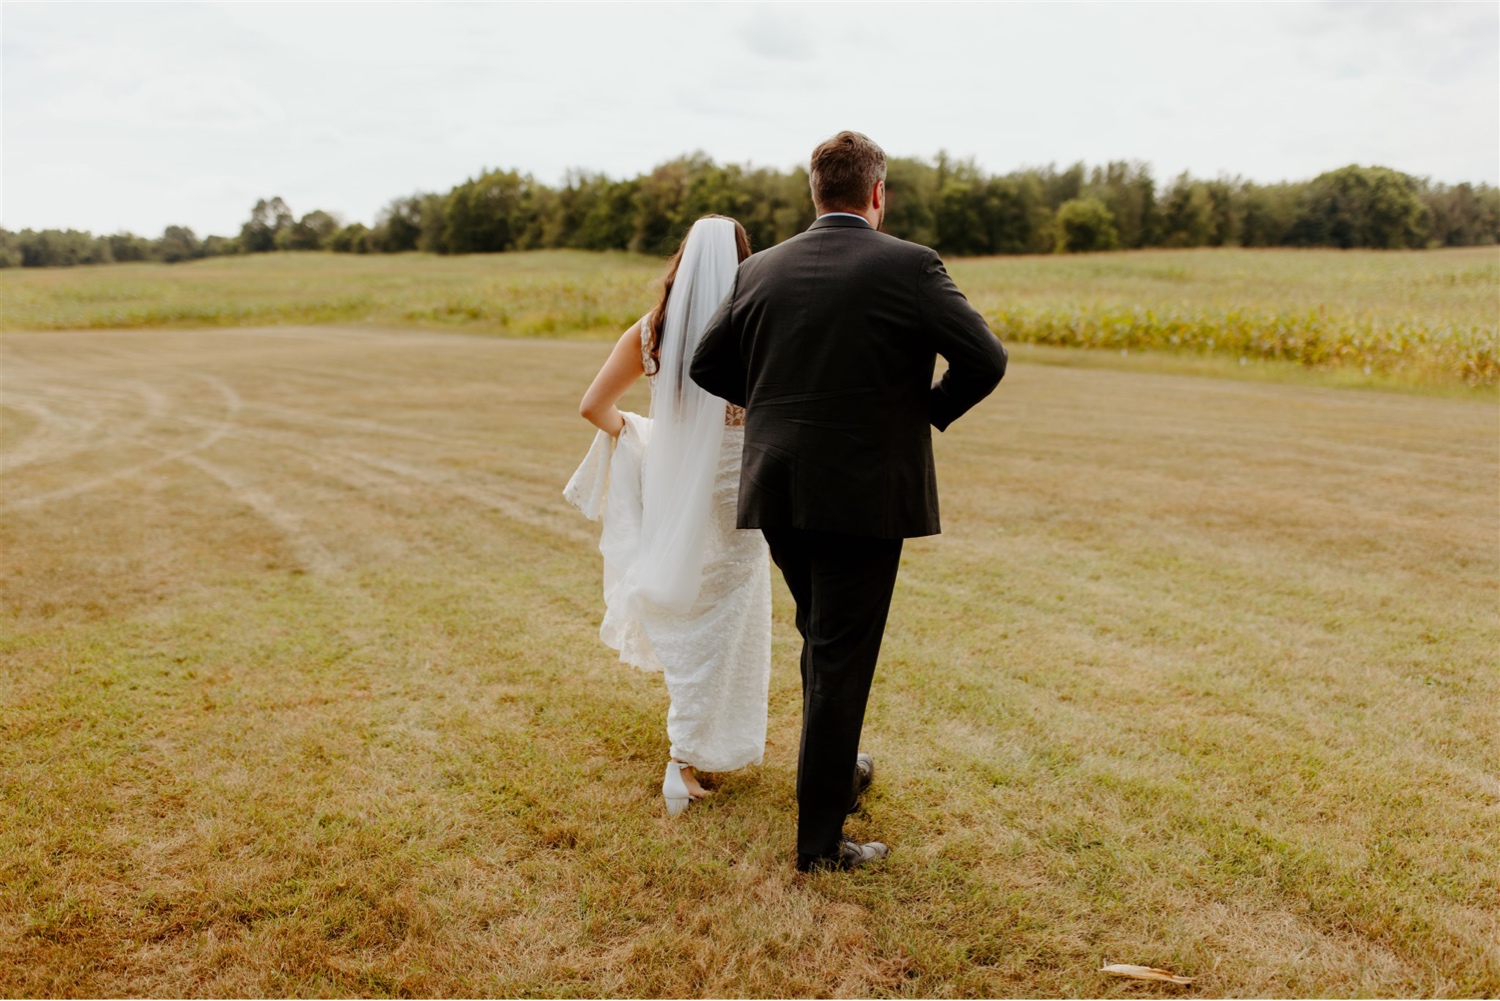 Michigan destination wedding by Hanna Walkowaik Photography